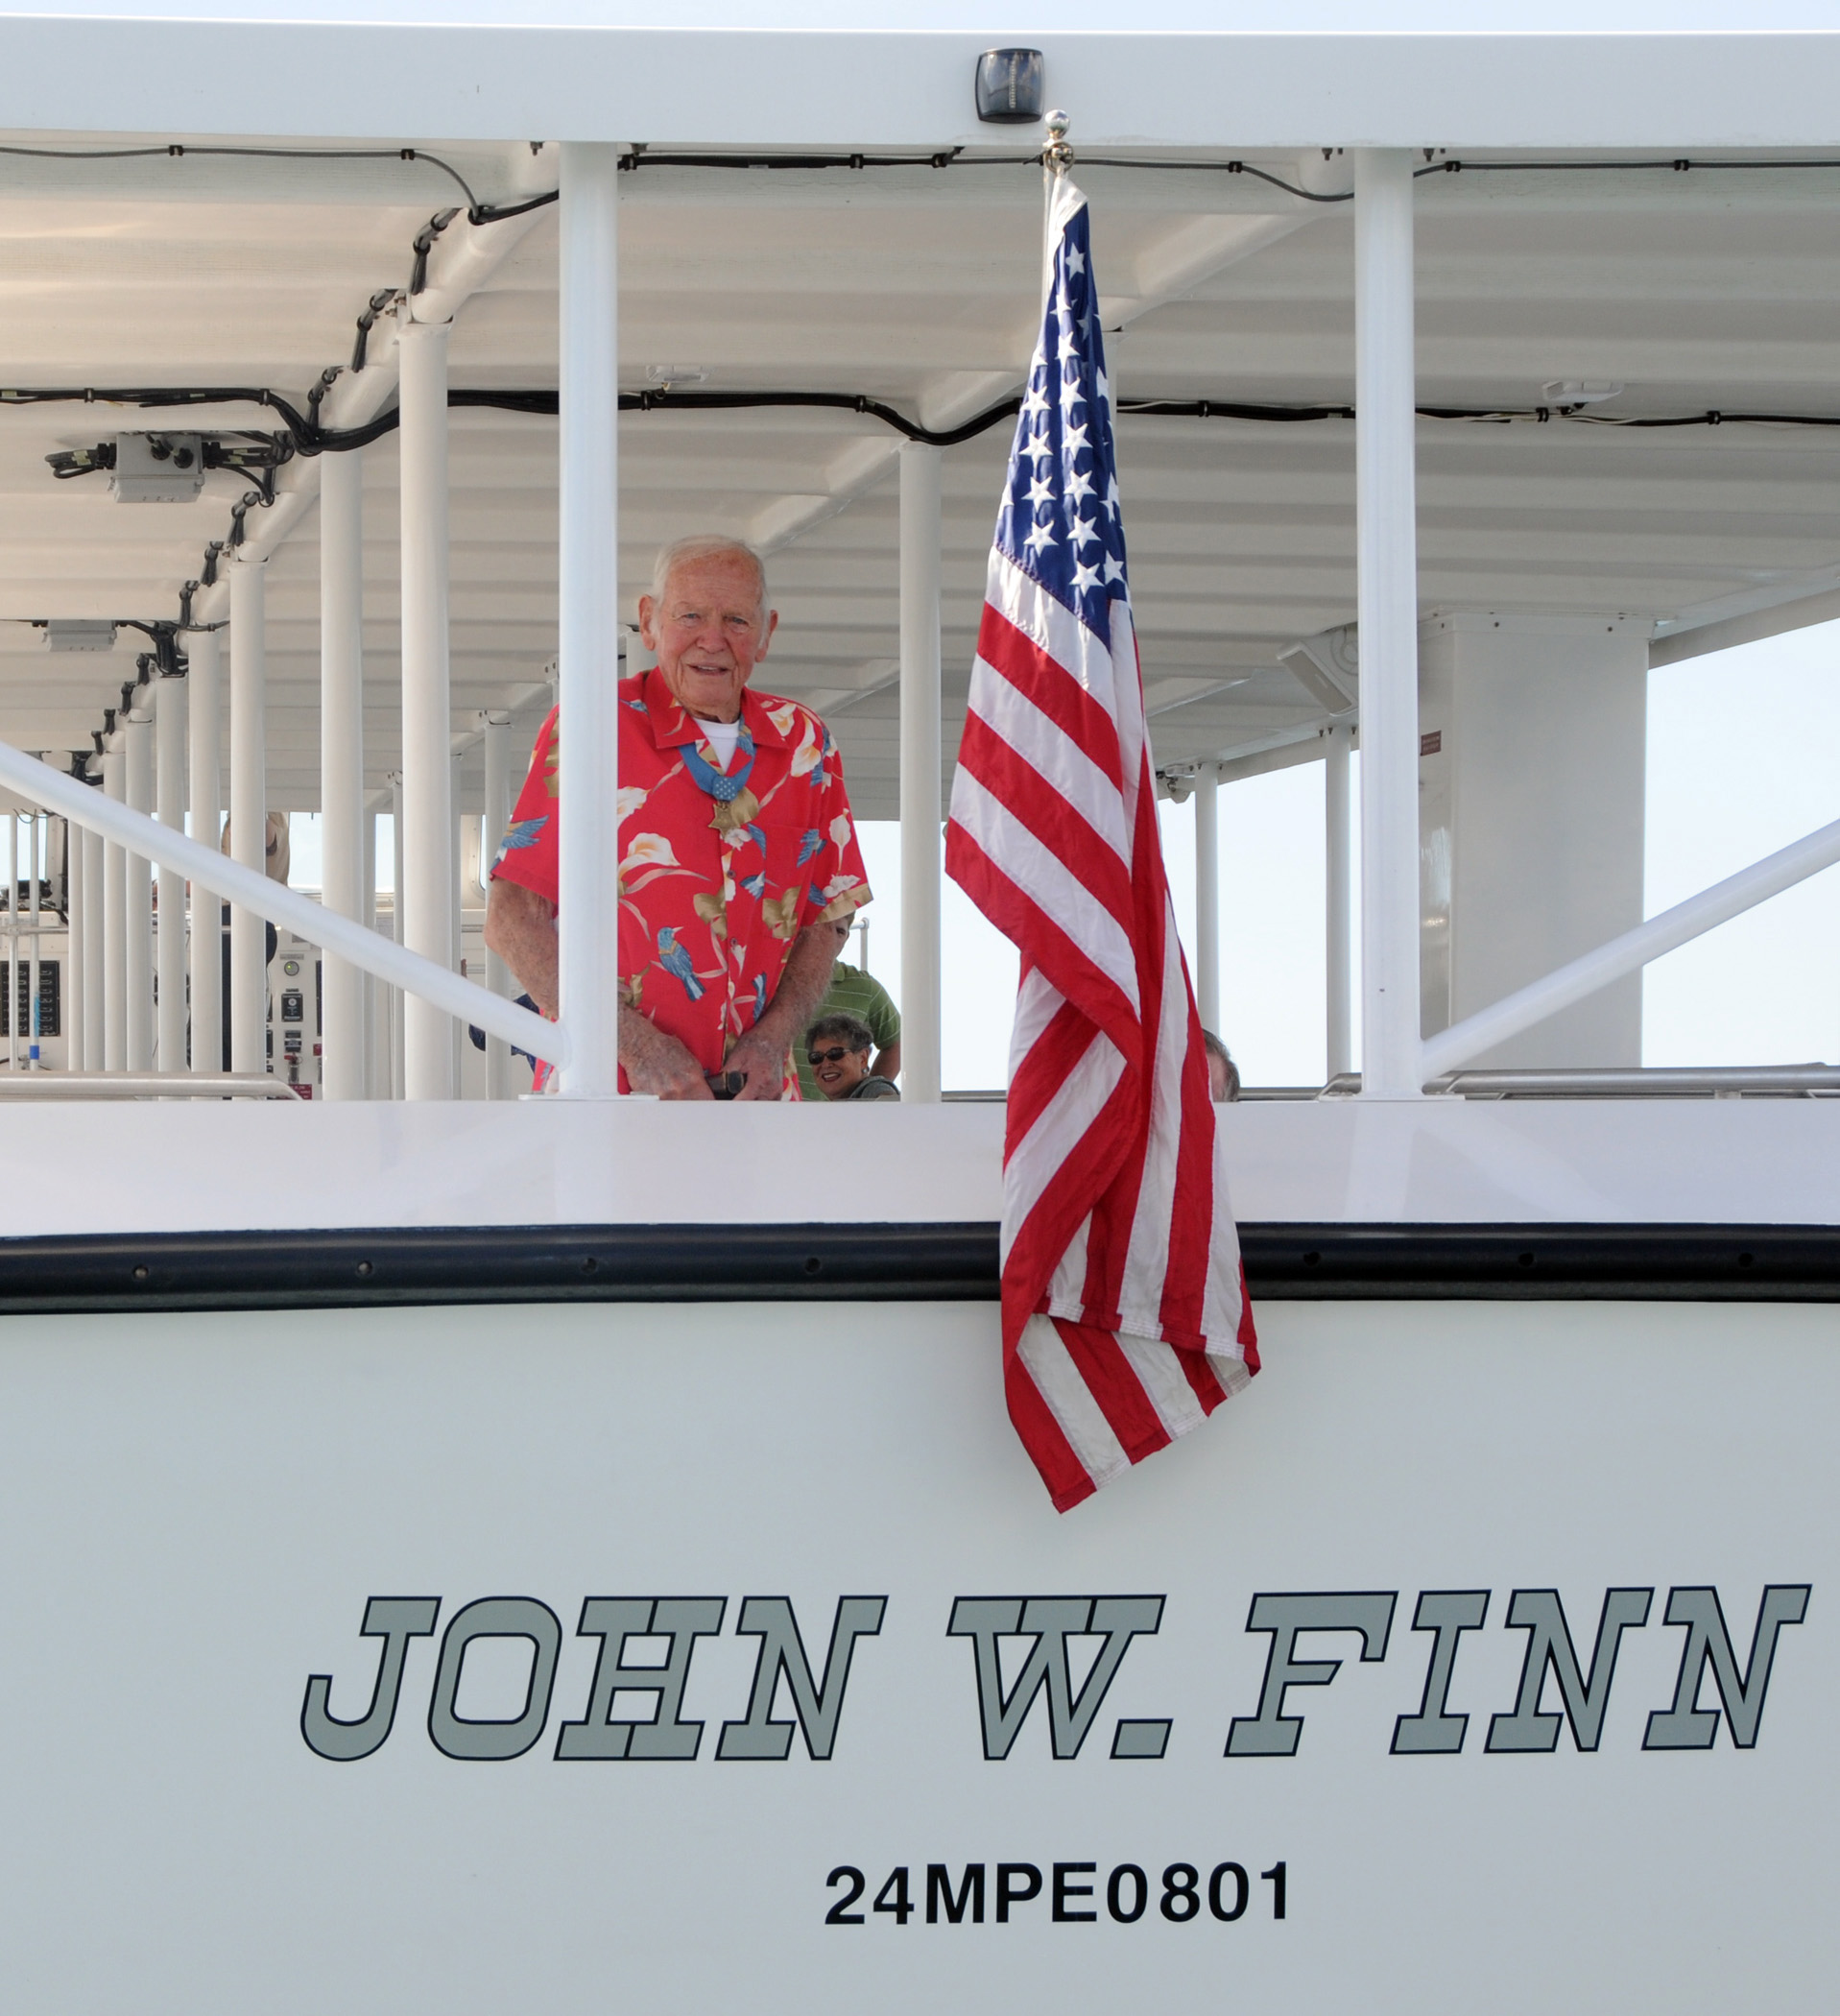 John Finn aboard his namesake ferry. Photo courtesy of U.S. Navy.